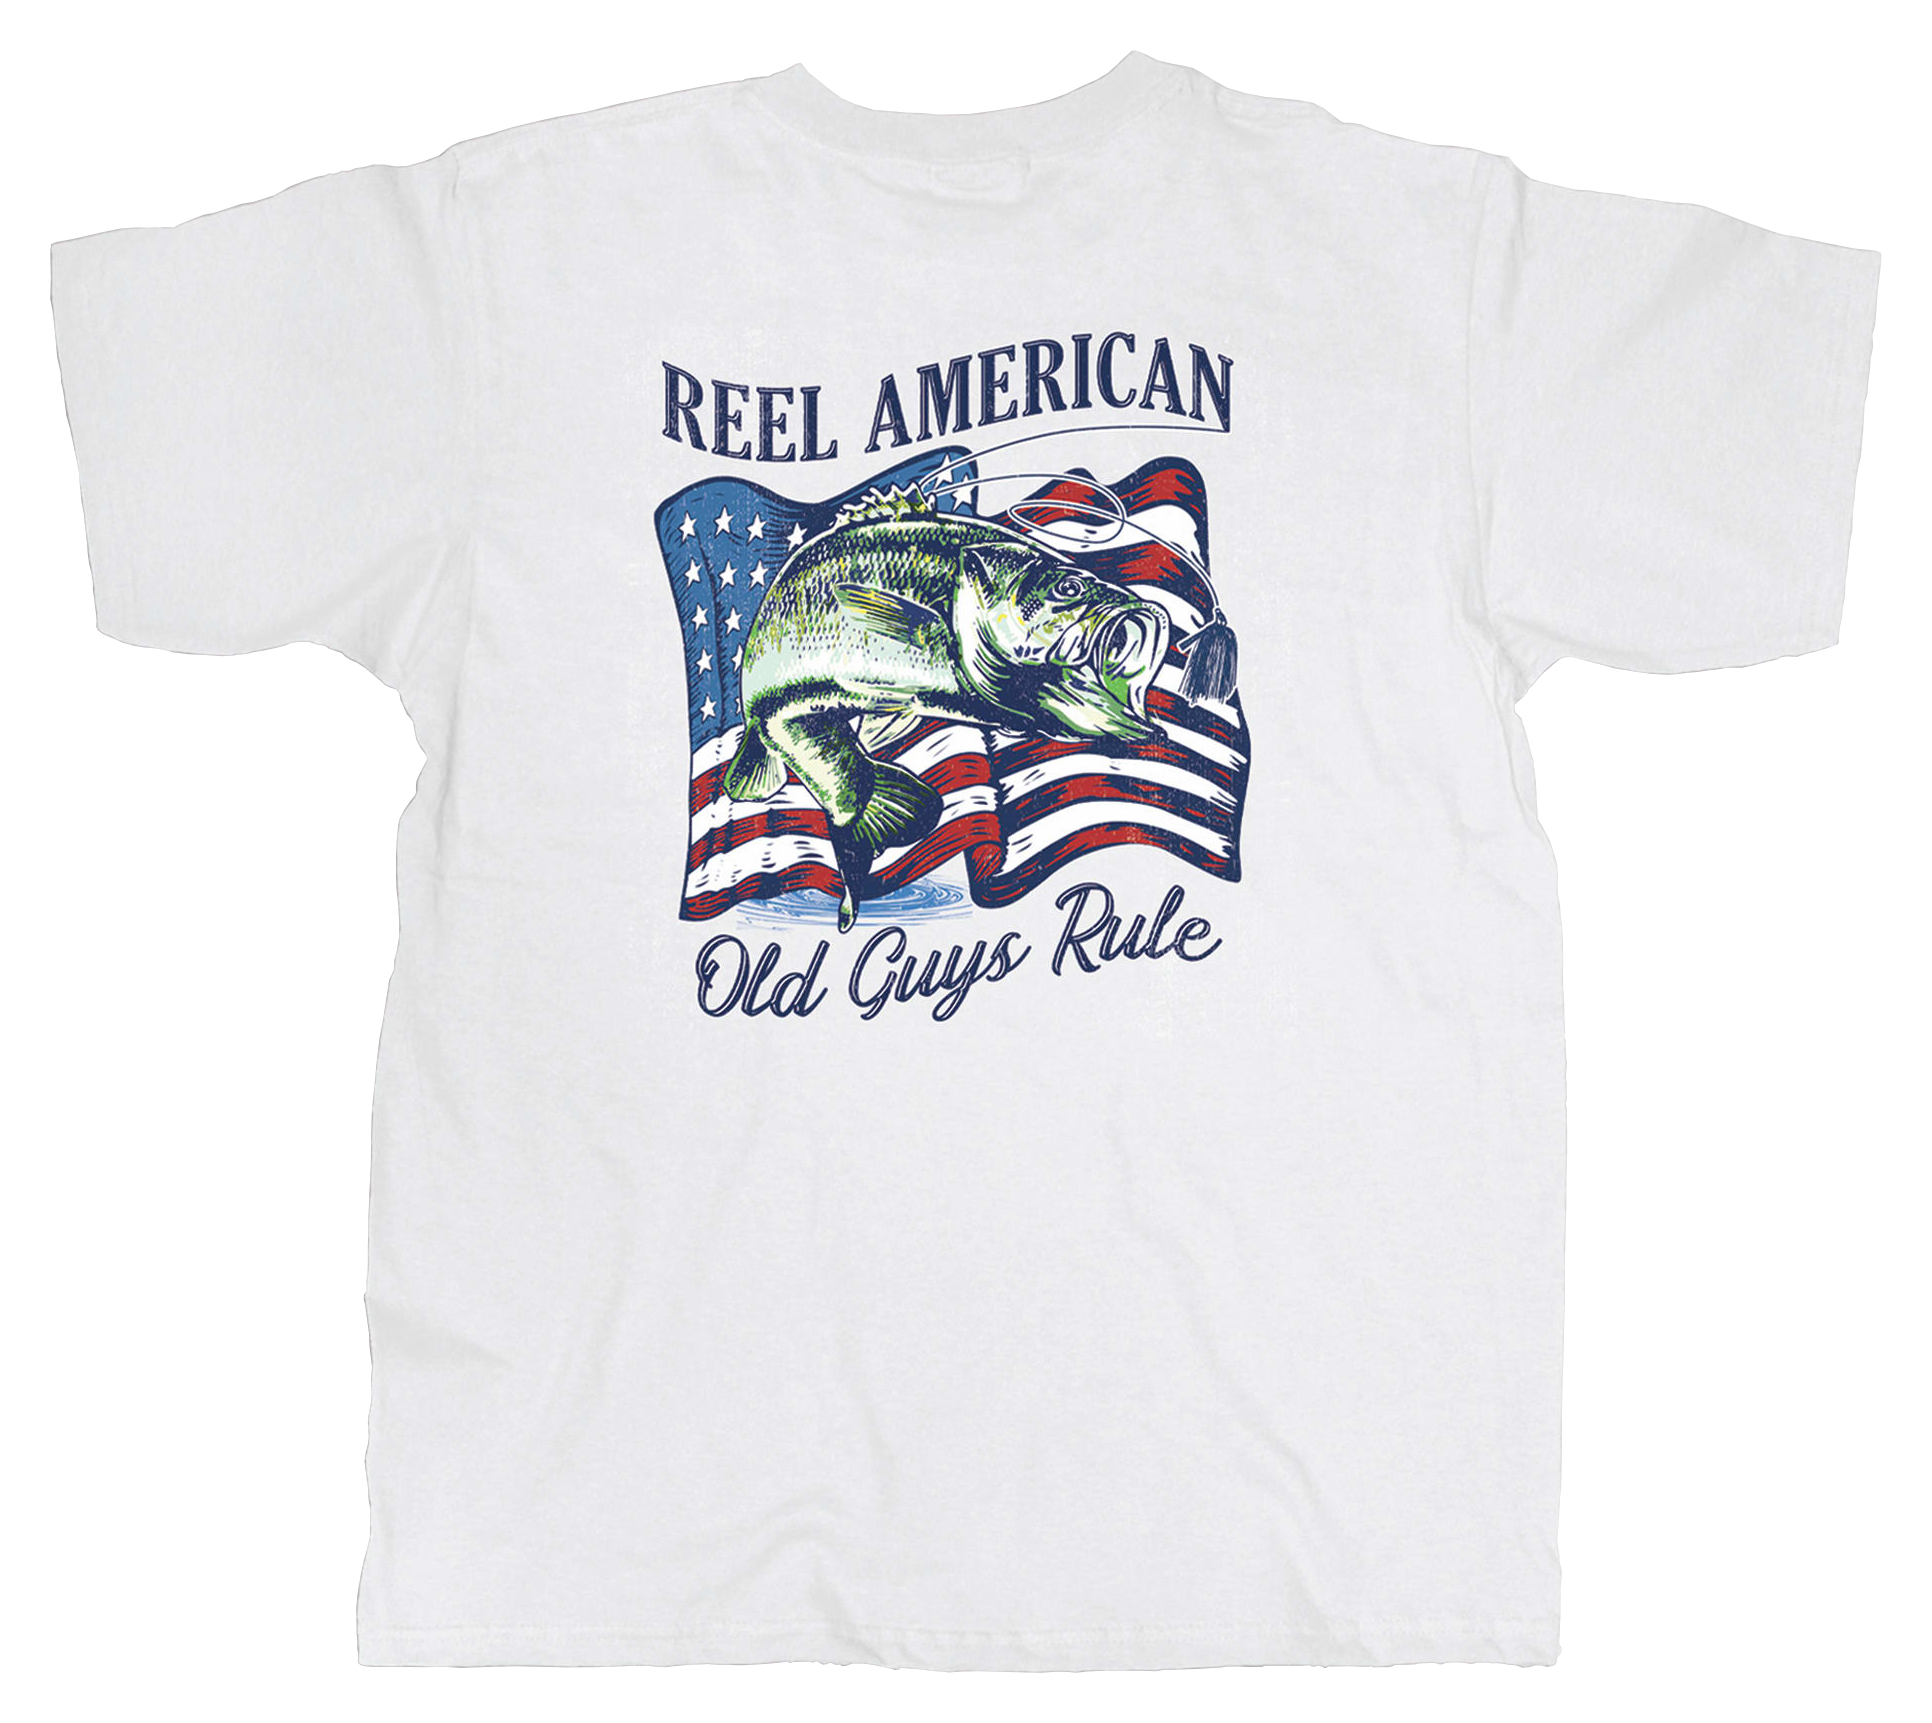 Old Guys Rule Reel American Short-Sleeve T-Shirt for Men